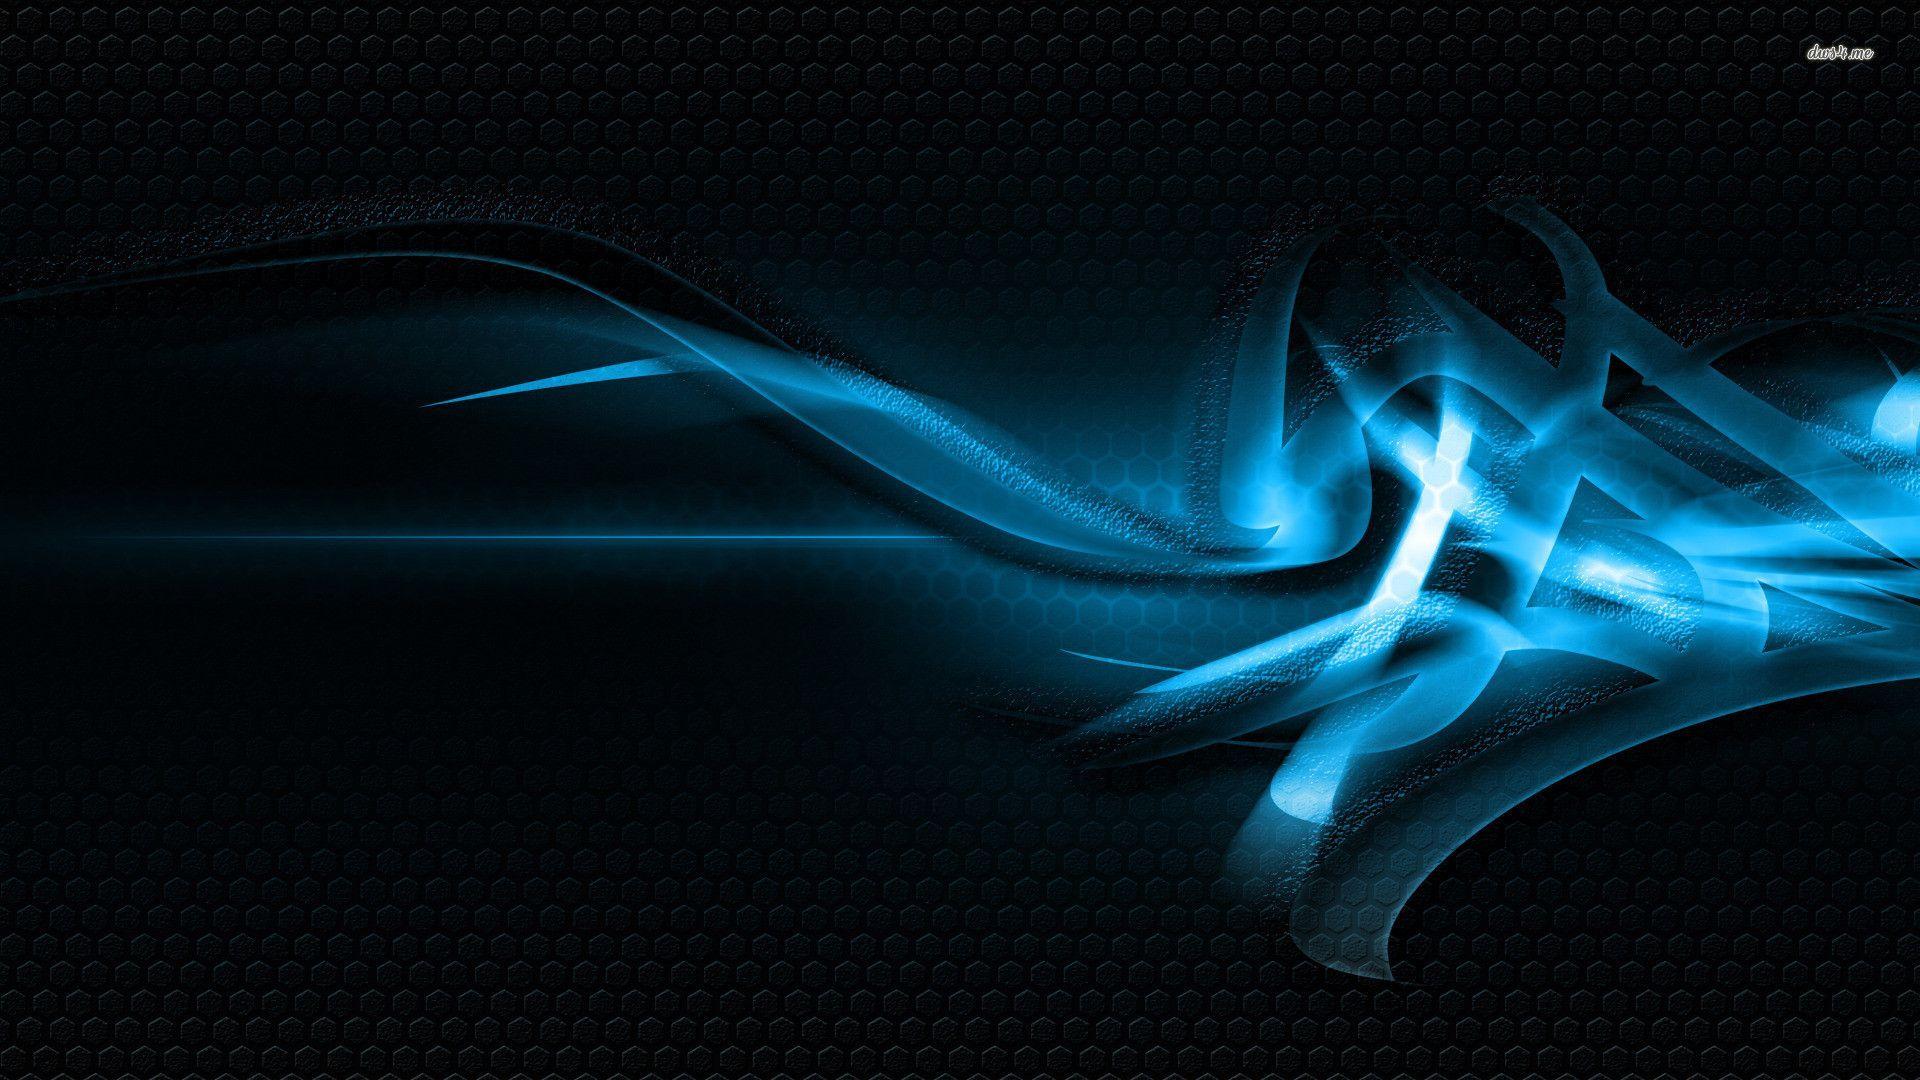 Dark Blue Abstract Image HD Wallpapers Desktop